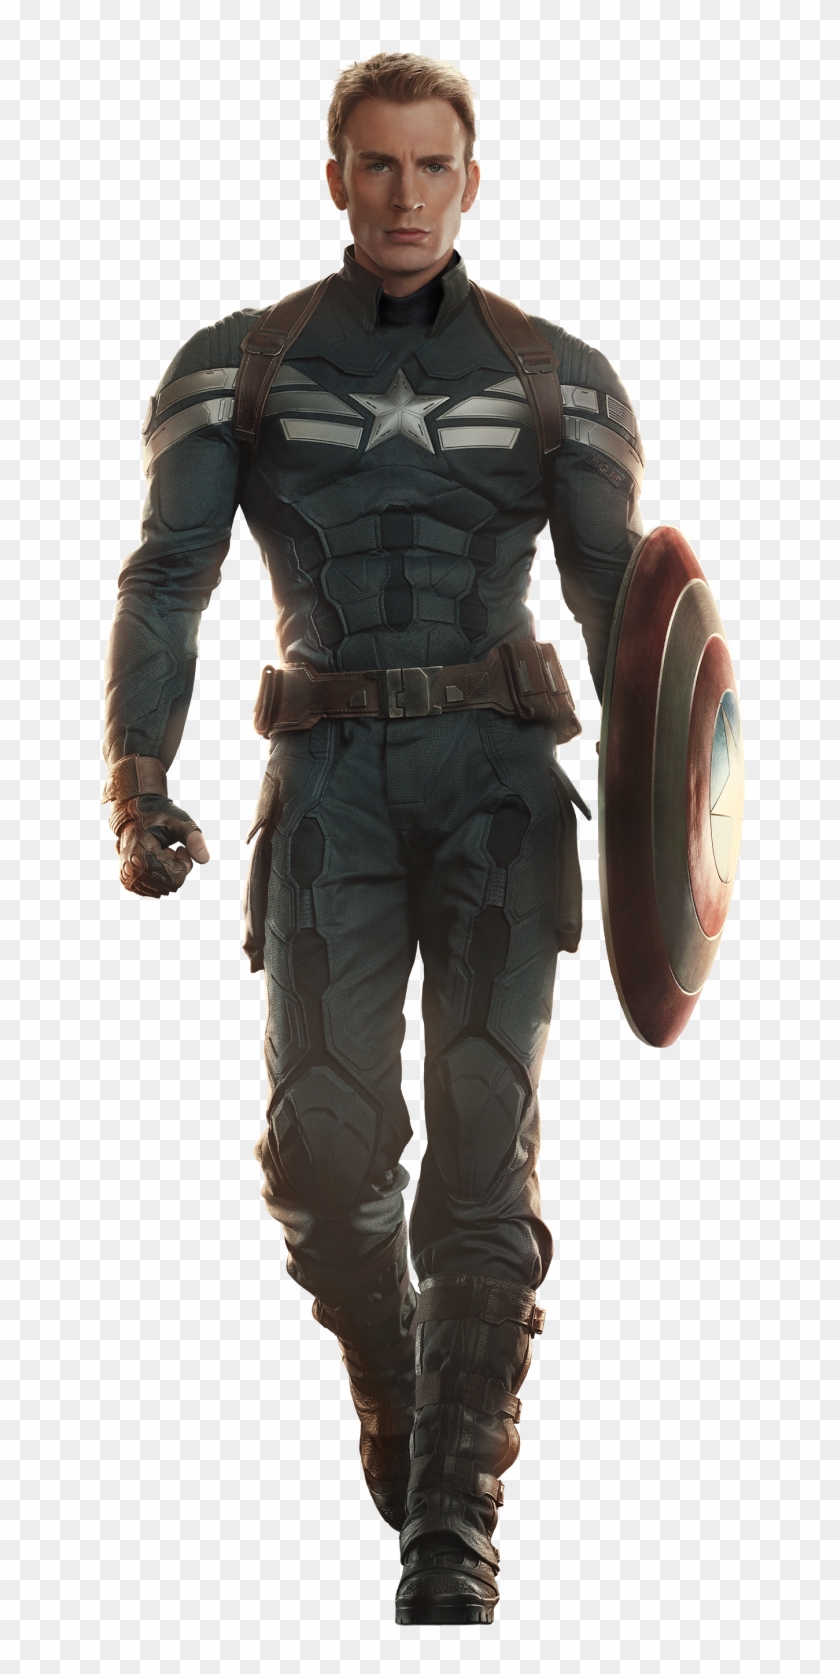 Captain America Png Image Transparent Background - Captain America Chris Evans Standing Clipart